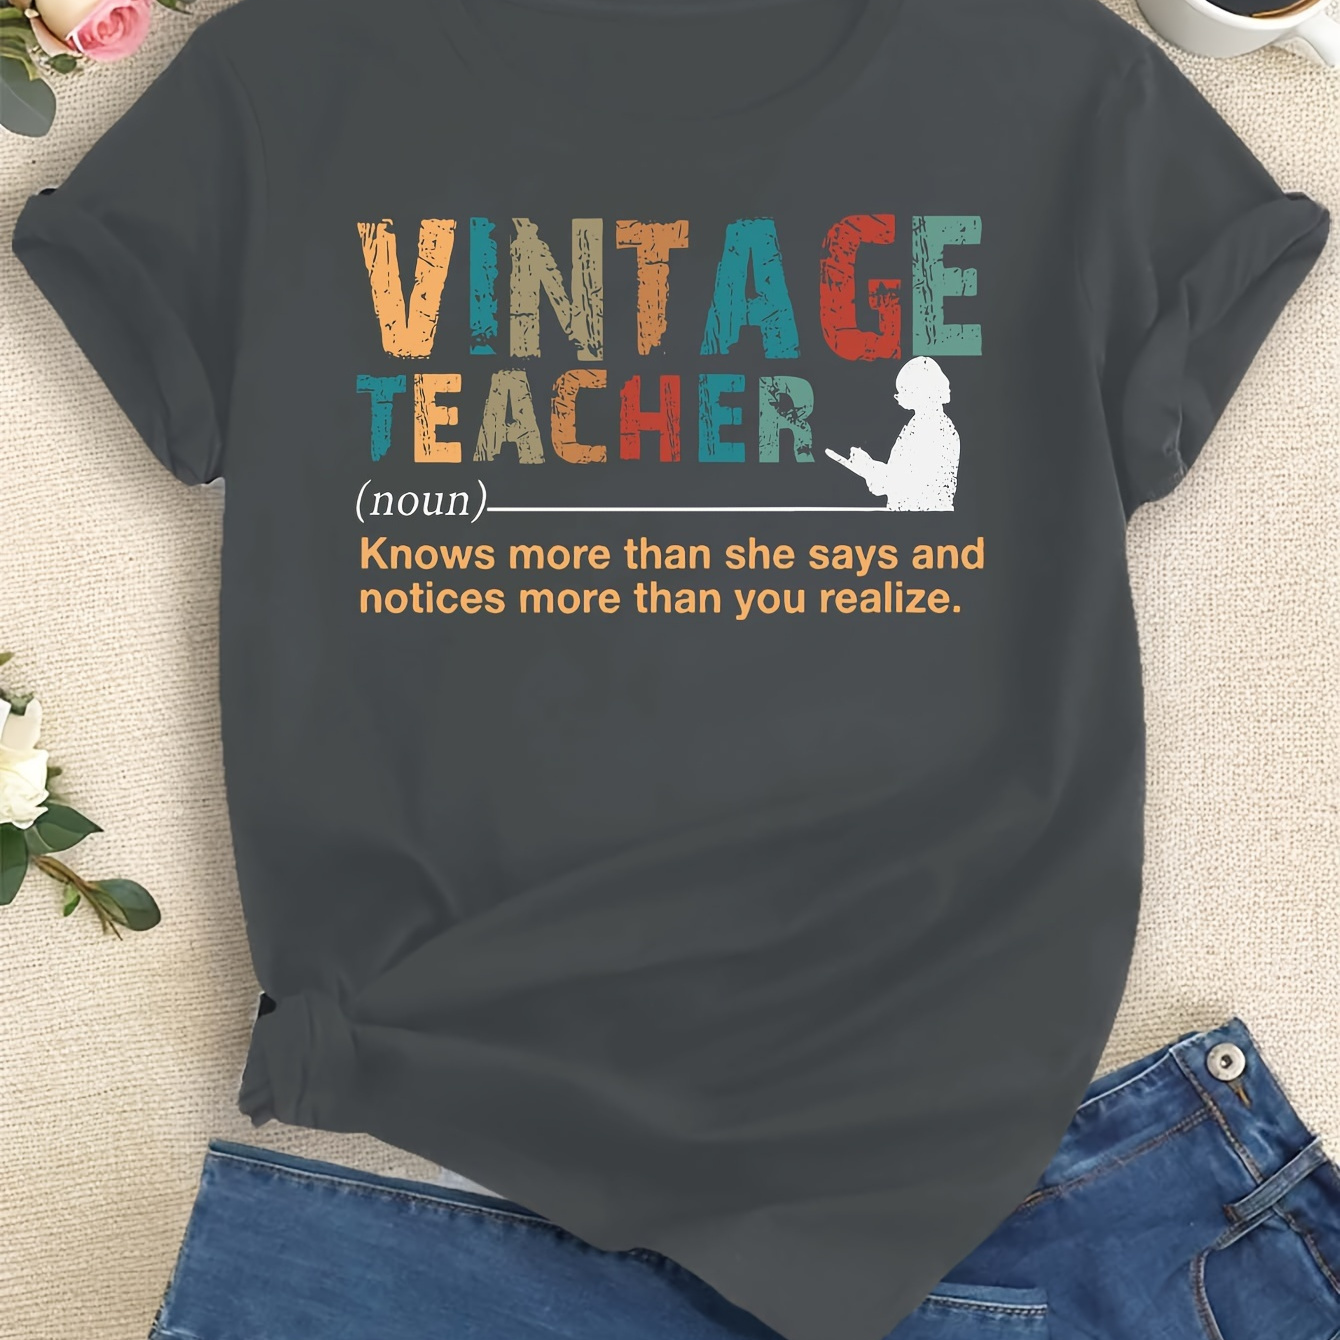 

Teachers' Day Vintage Teacher Print T-shirt, Short Sleeve Crew Neck Casual Top For Summer & Spring, Women's Clothing